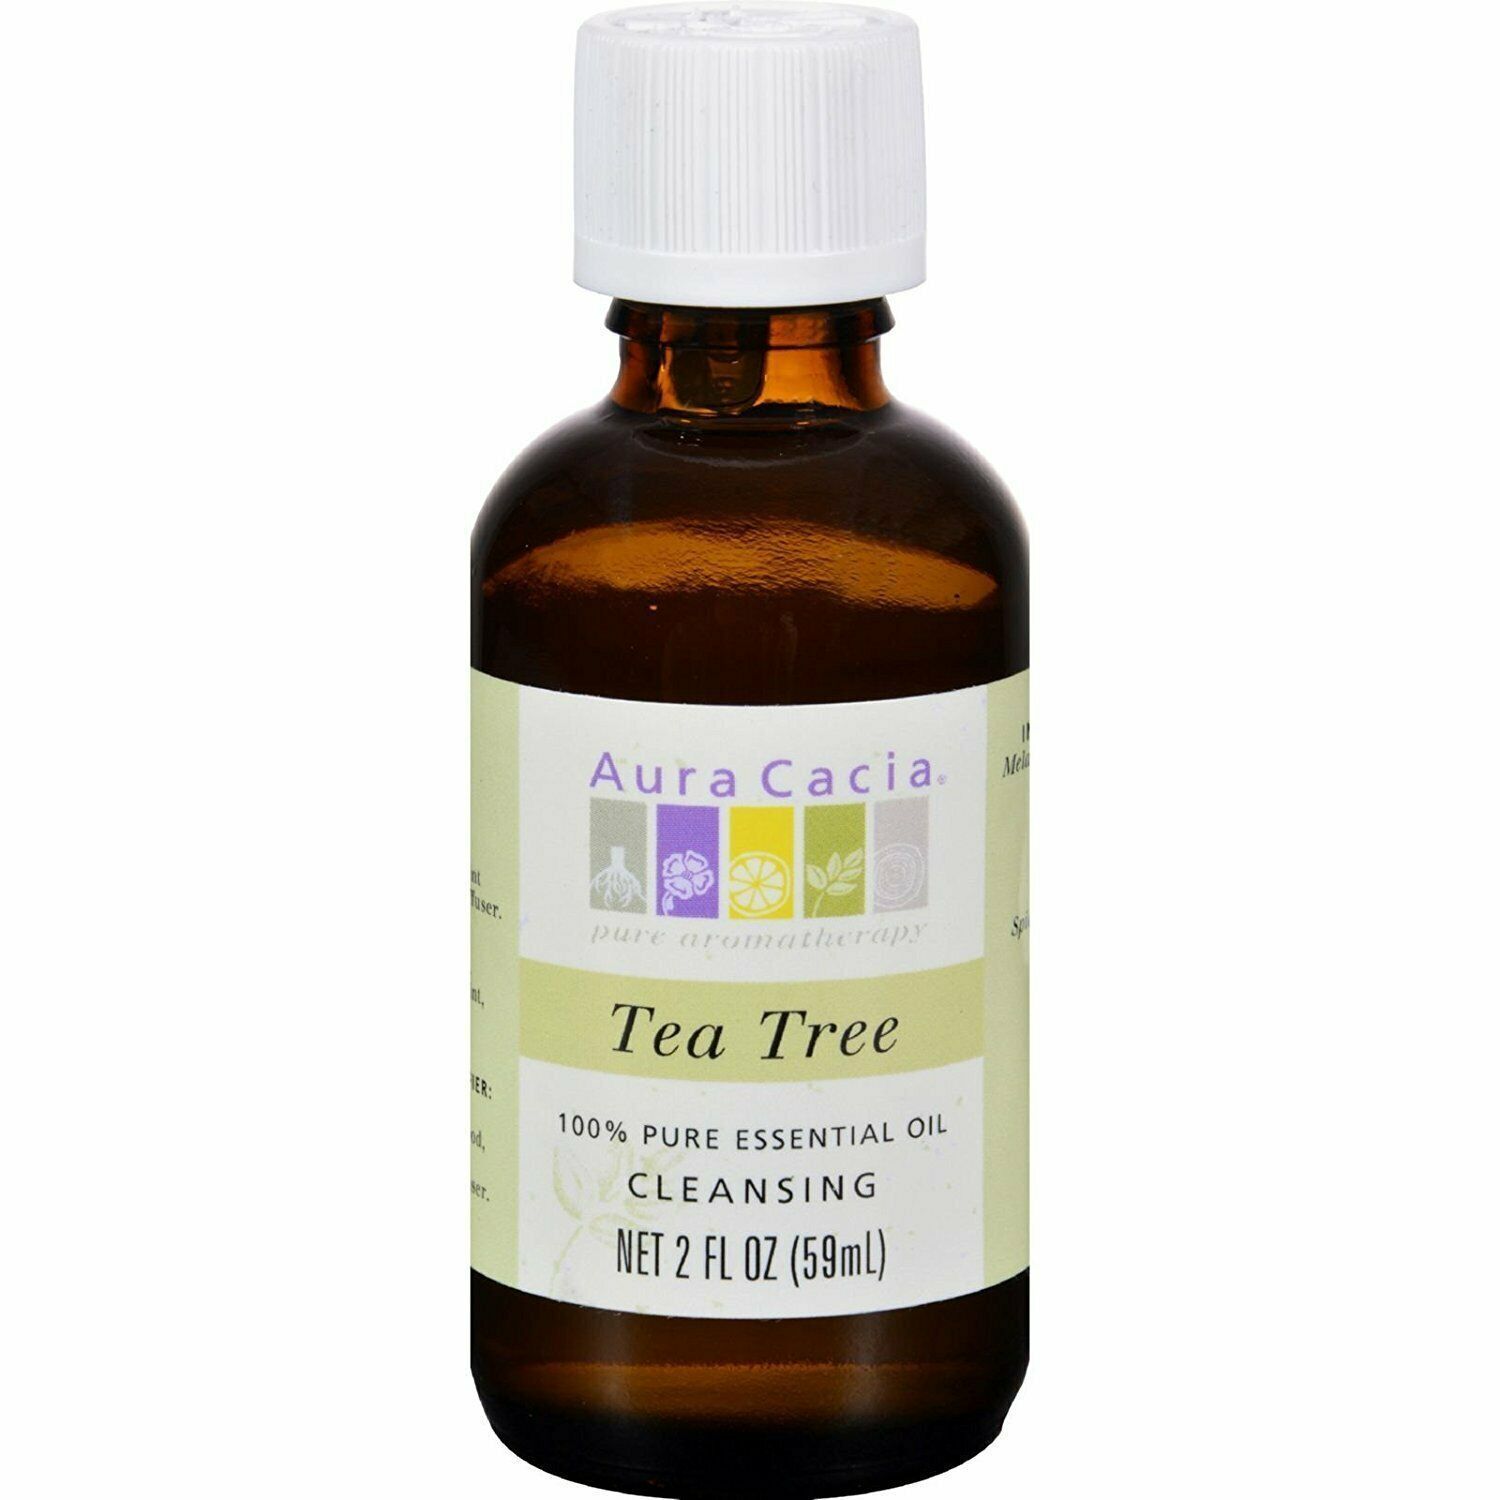 Primary image for Aura Cacia 100% Pure Essential Oil Tea Tree - 2 fl oz